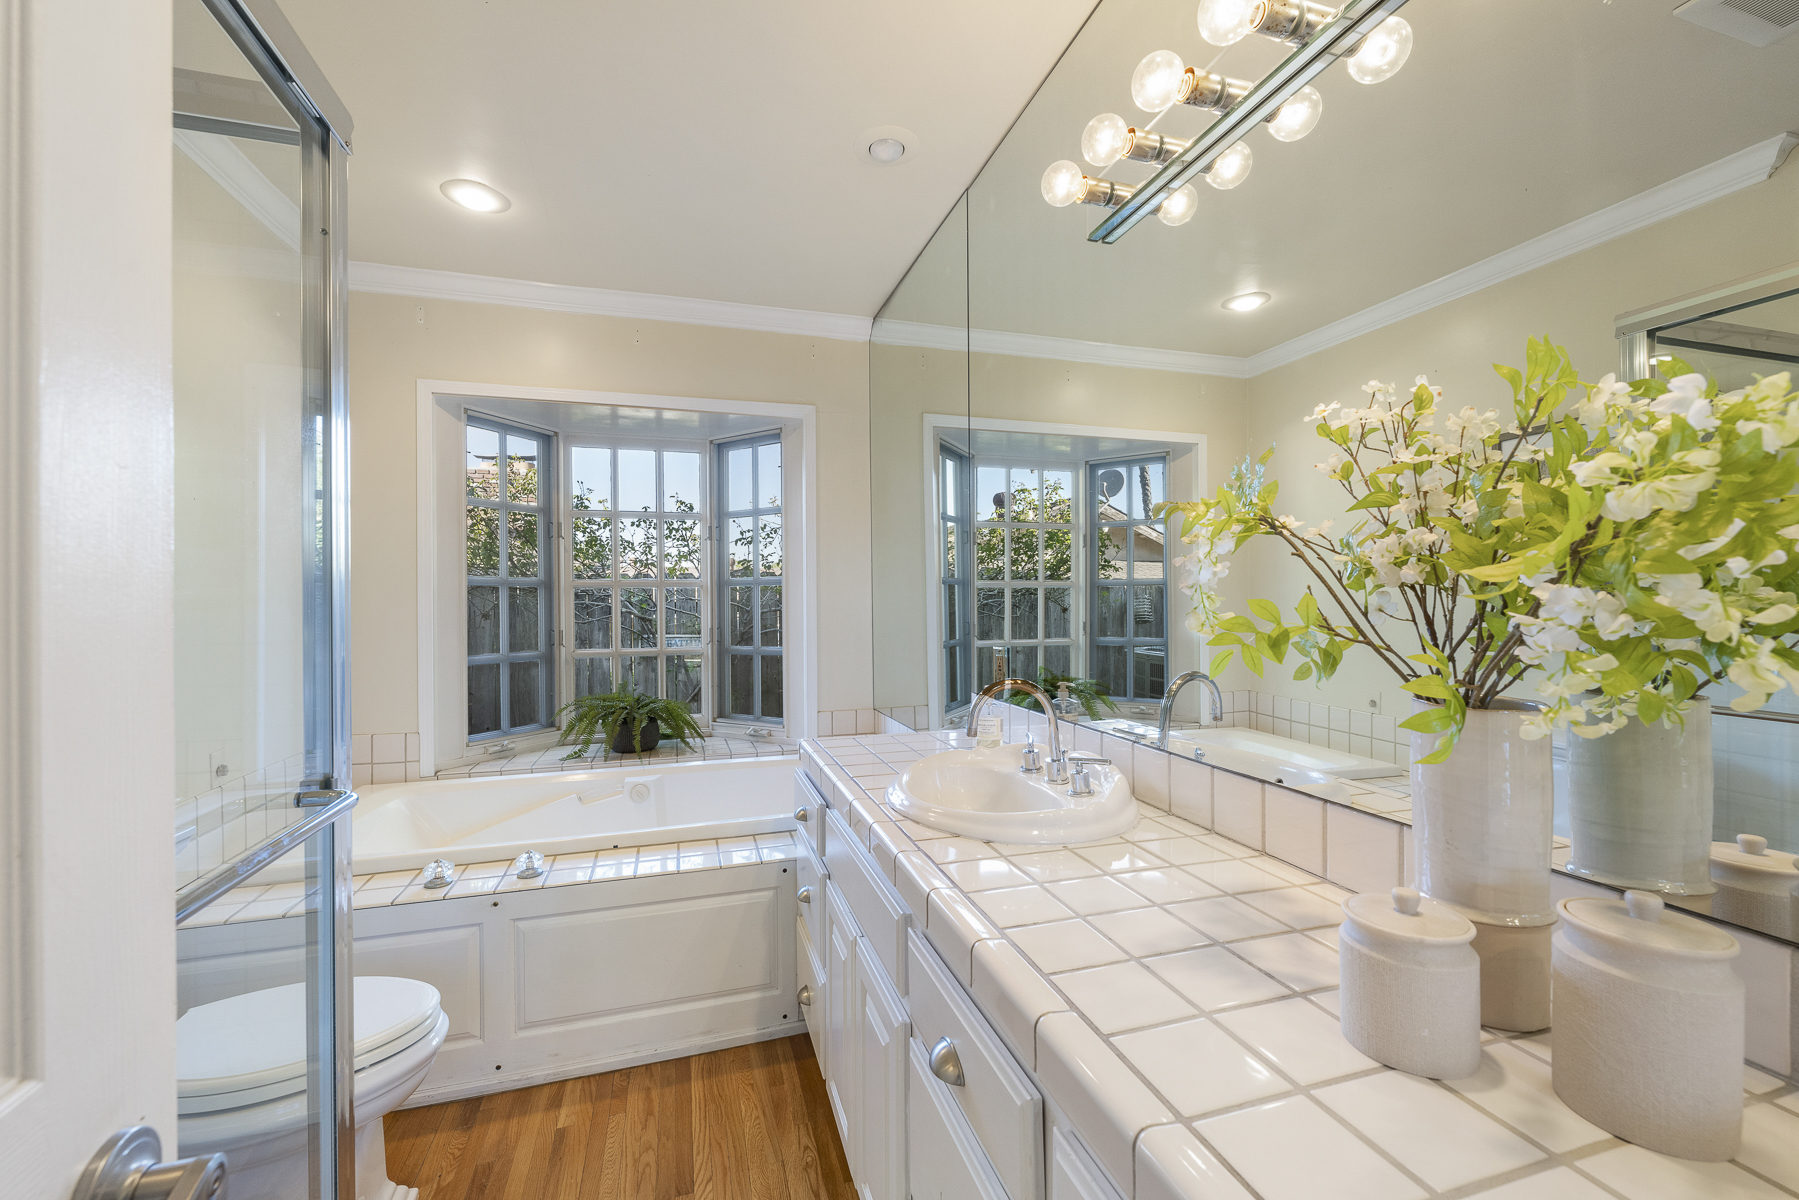 806 N. Adlena Drive, Fullerton, CA 92833: Interior shot of bathroom bathtub and countertop sink.